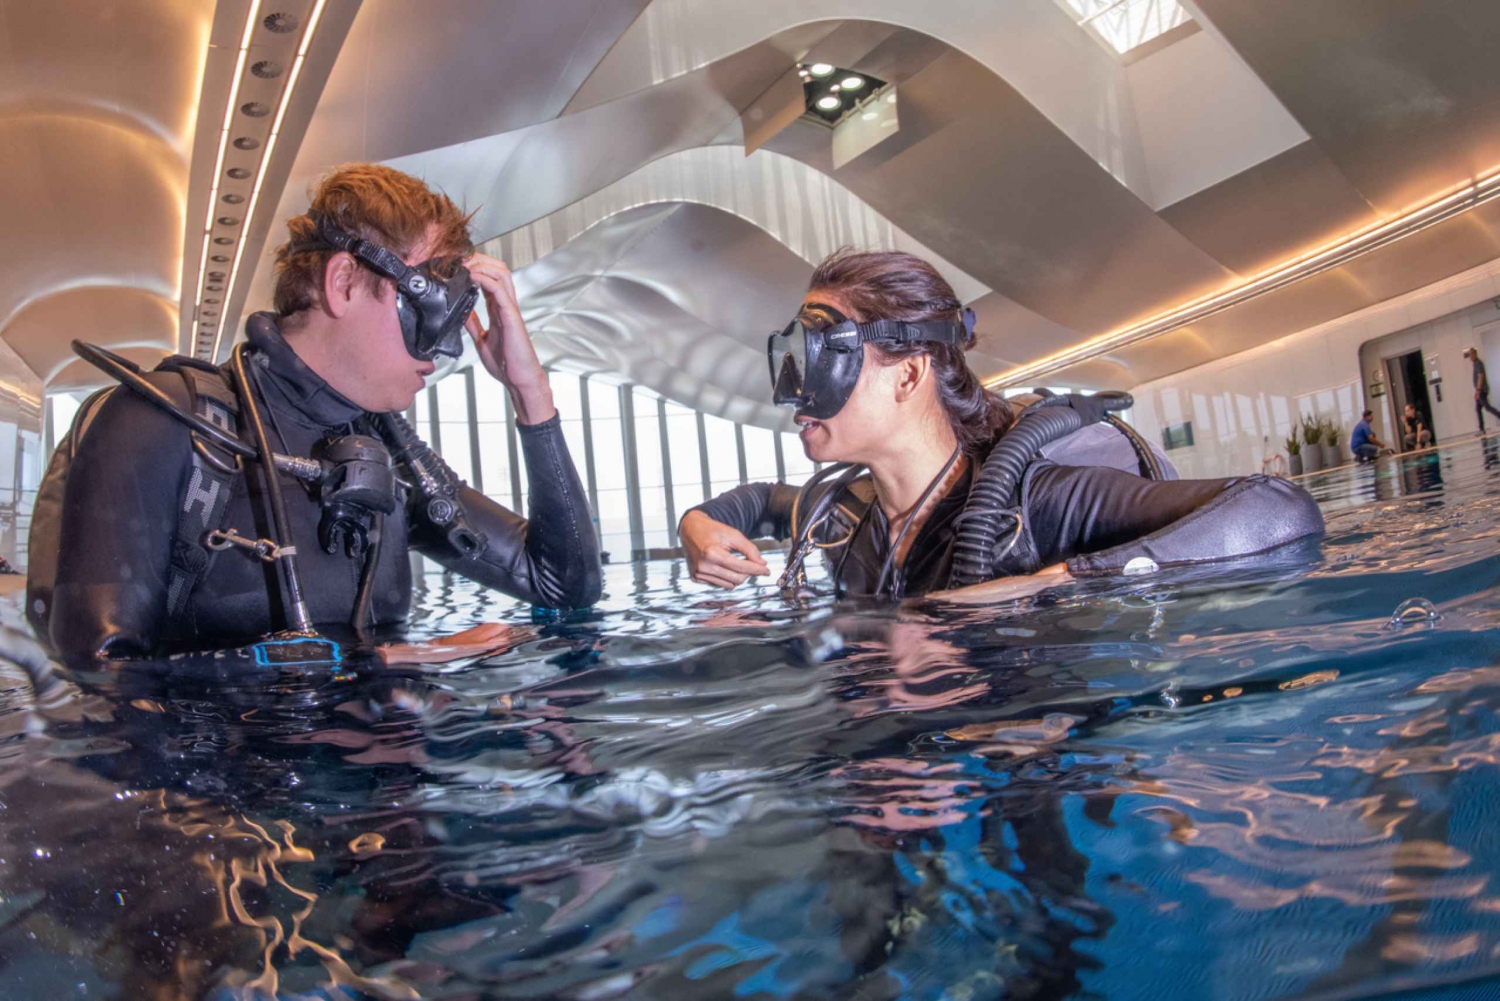 Dubai: Deep Dive or Snorkel Tour at Deep Dive with Transfers